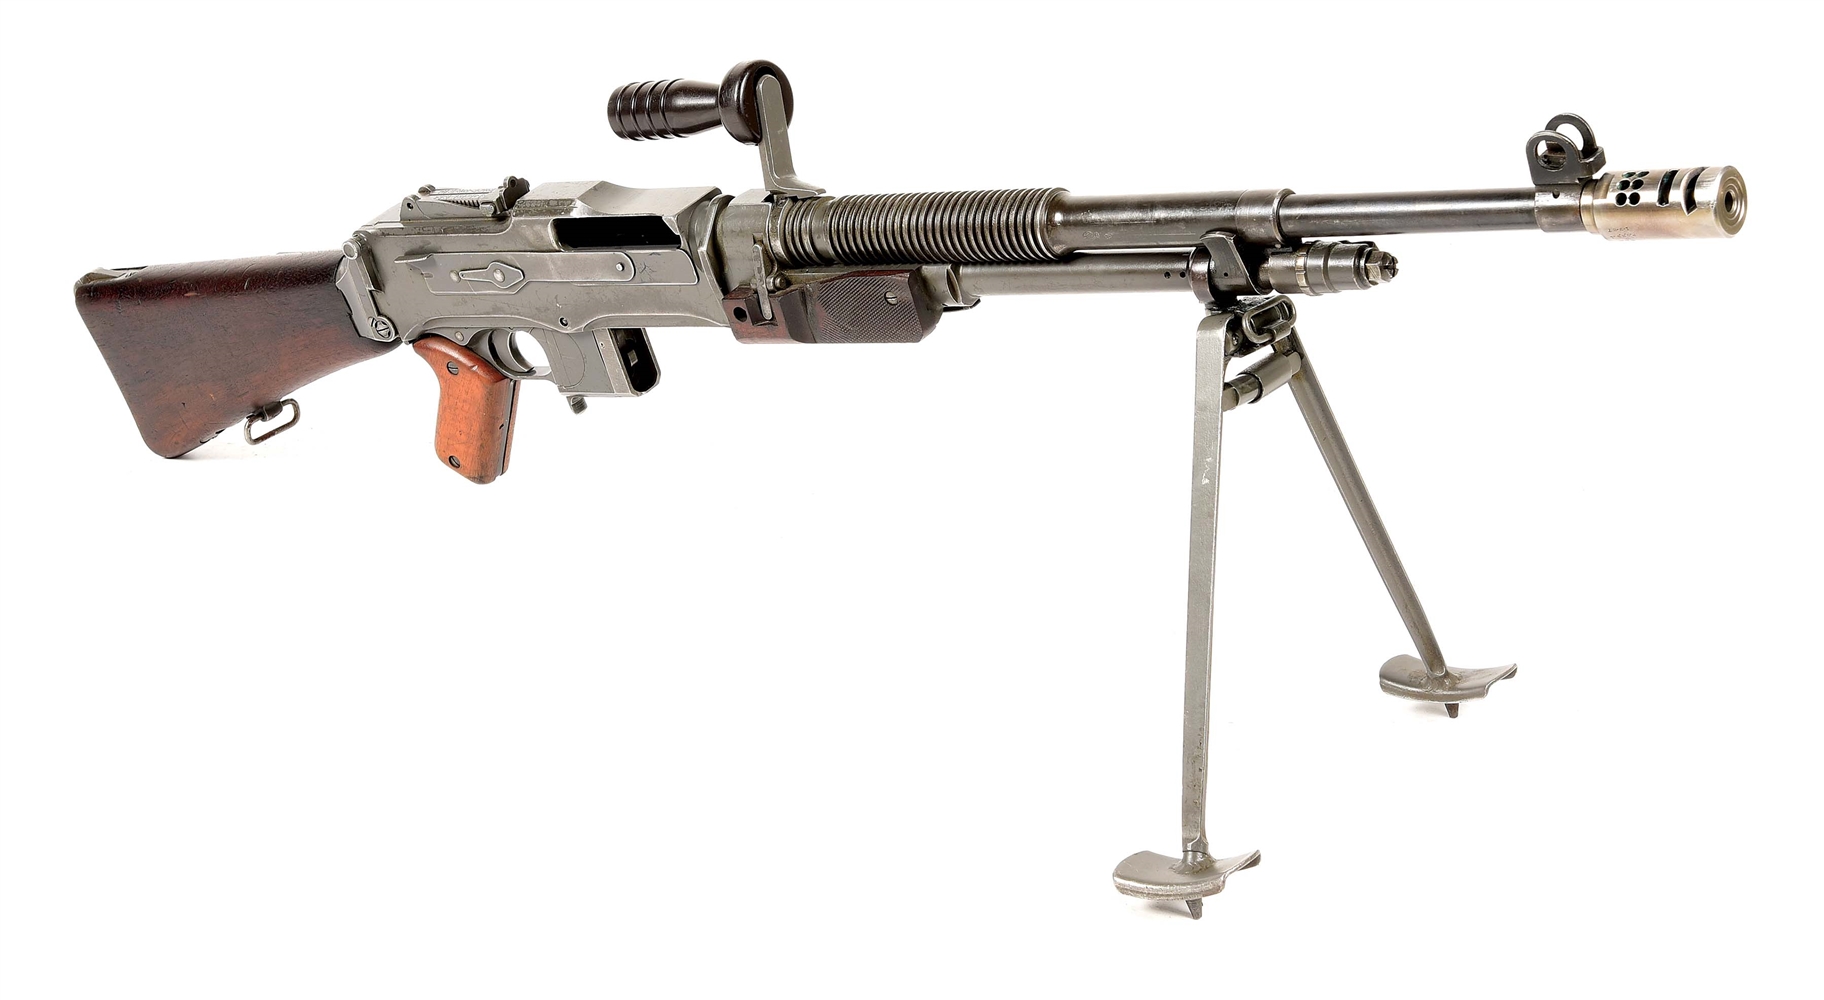 (N) OUTSTANDING ORIGINAL BELGIAN FN HERSTAL FN-DA1 MACHINE GUN IN 7.62 NATO (PRE-86 DEALER SAMPLE).